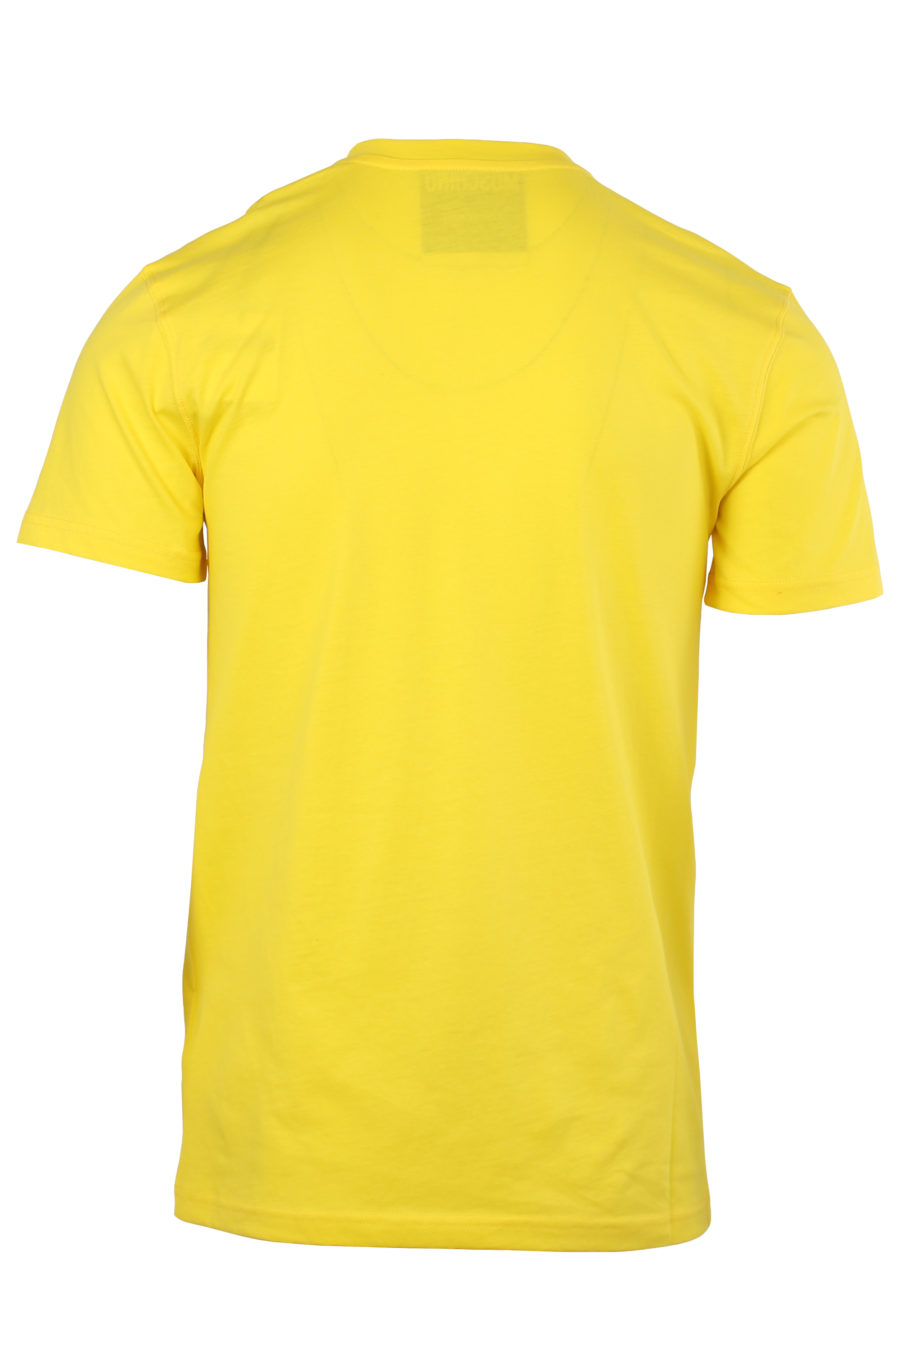 Camiseta amarilla "Smiley" con logo bordado - IMG 9975